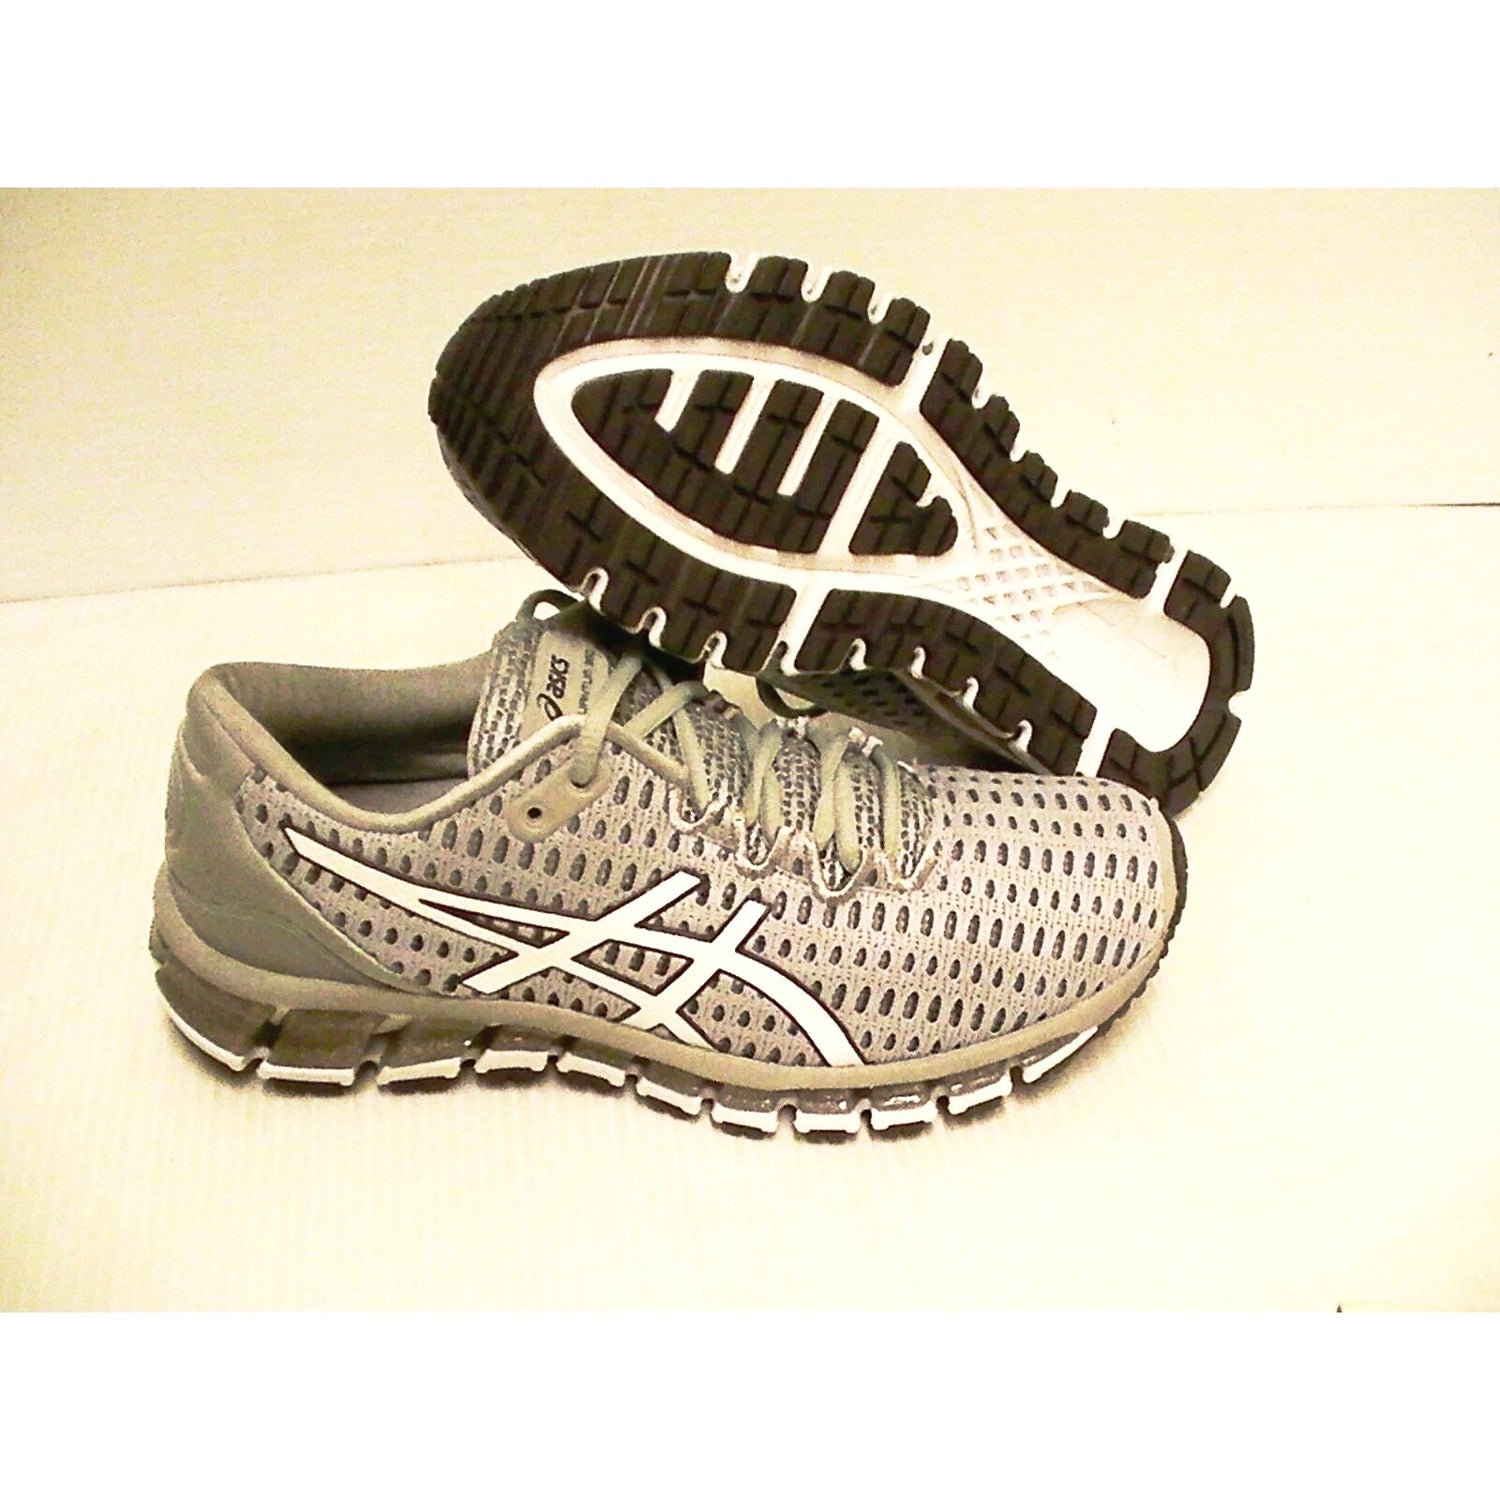 Asics women's gel quantum 360 shift mid grey running shoes size 6.5 us